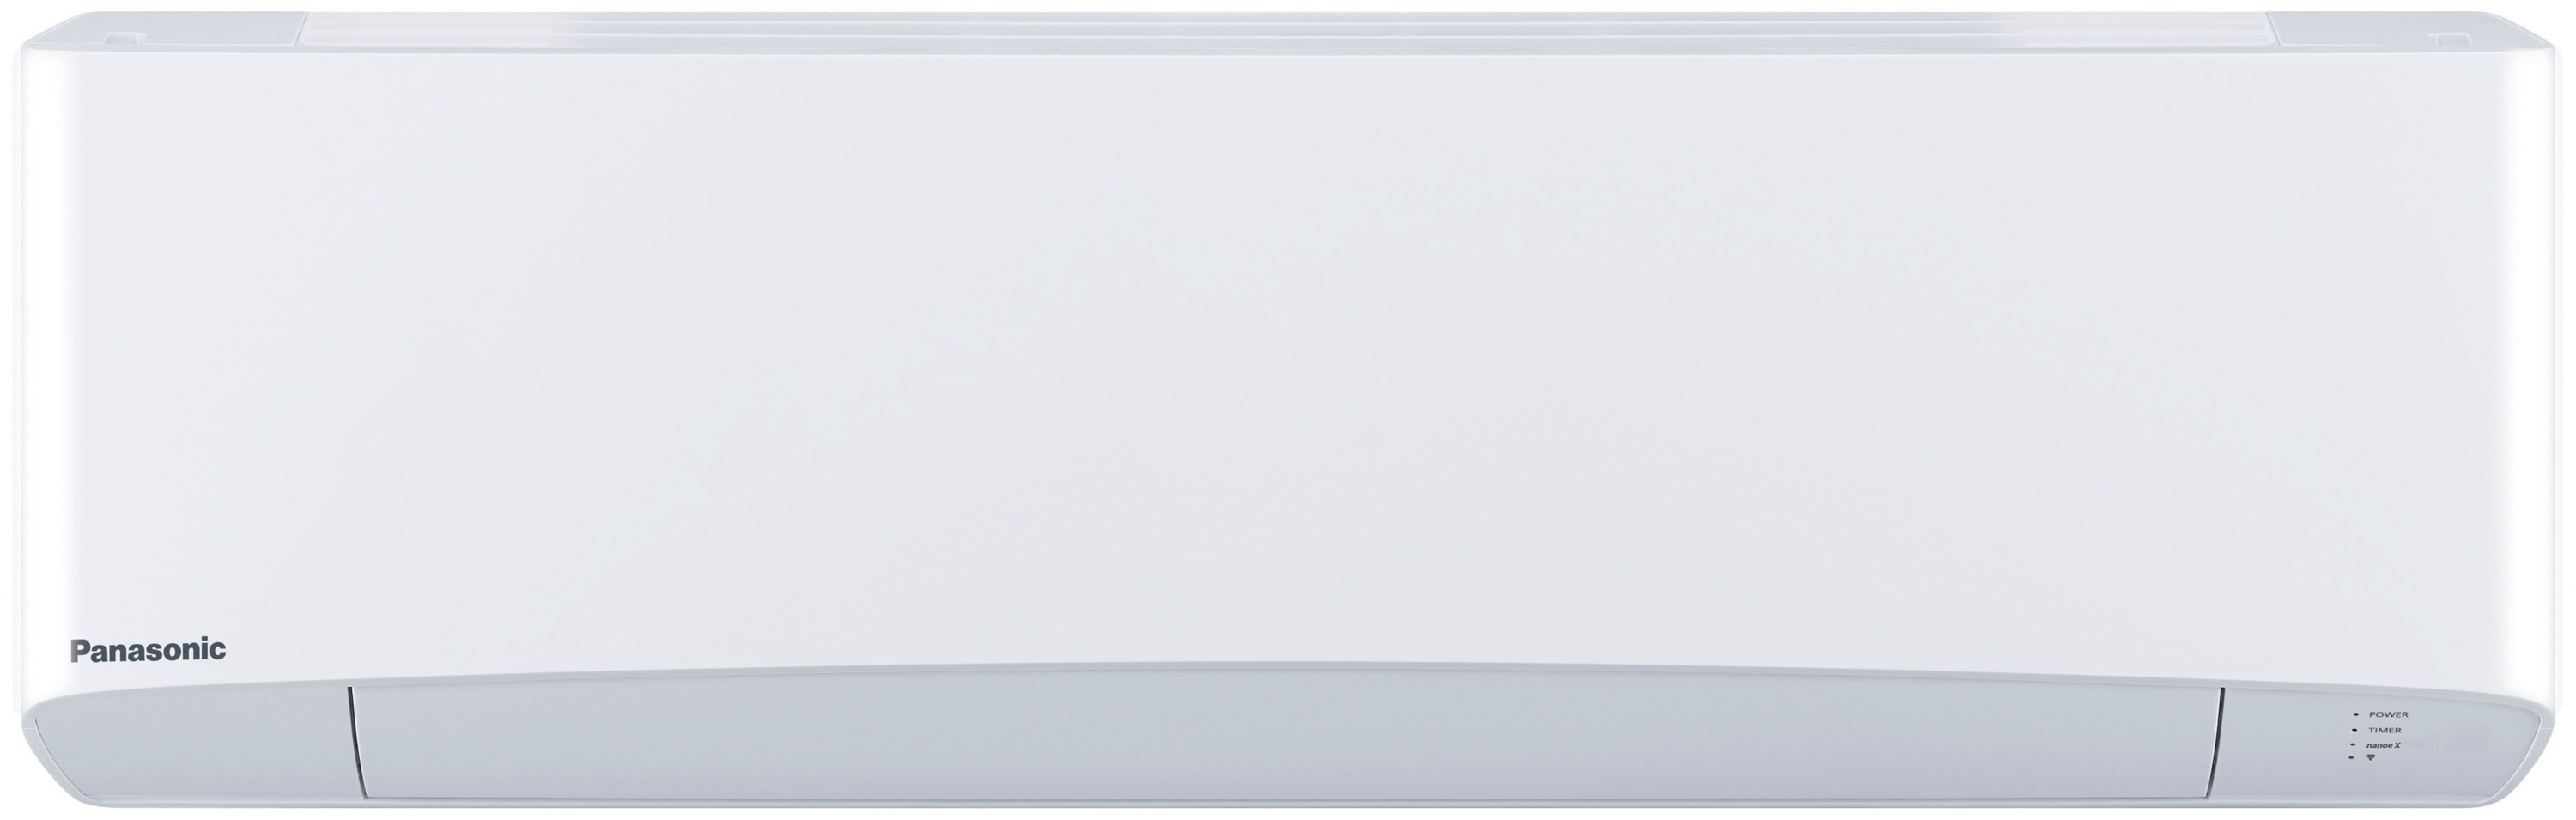 Кондиционер сплит-система Panasonic Flagship White CS/CU-Z71TKEW цена 99999.00 грн - фотография 2